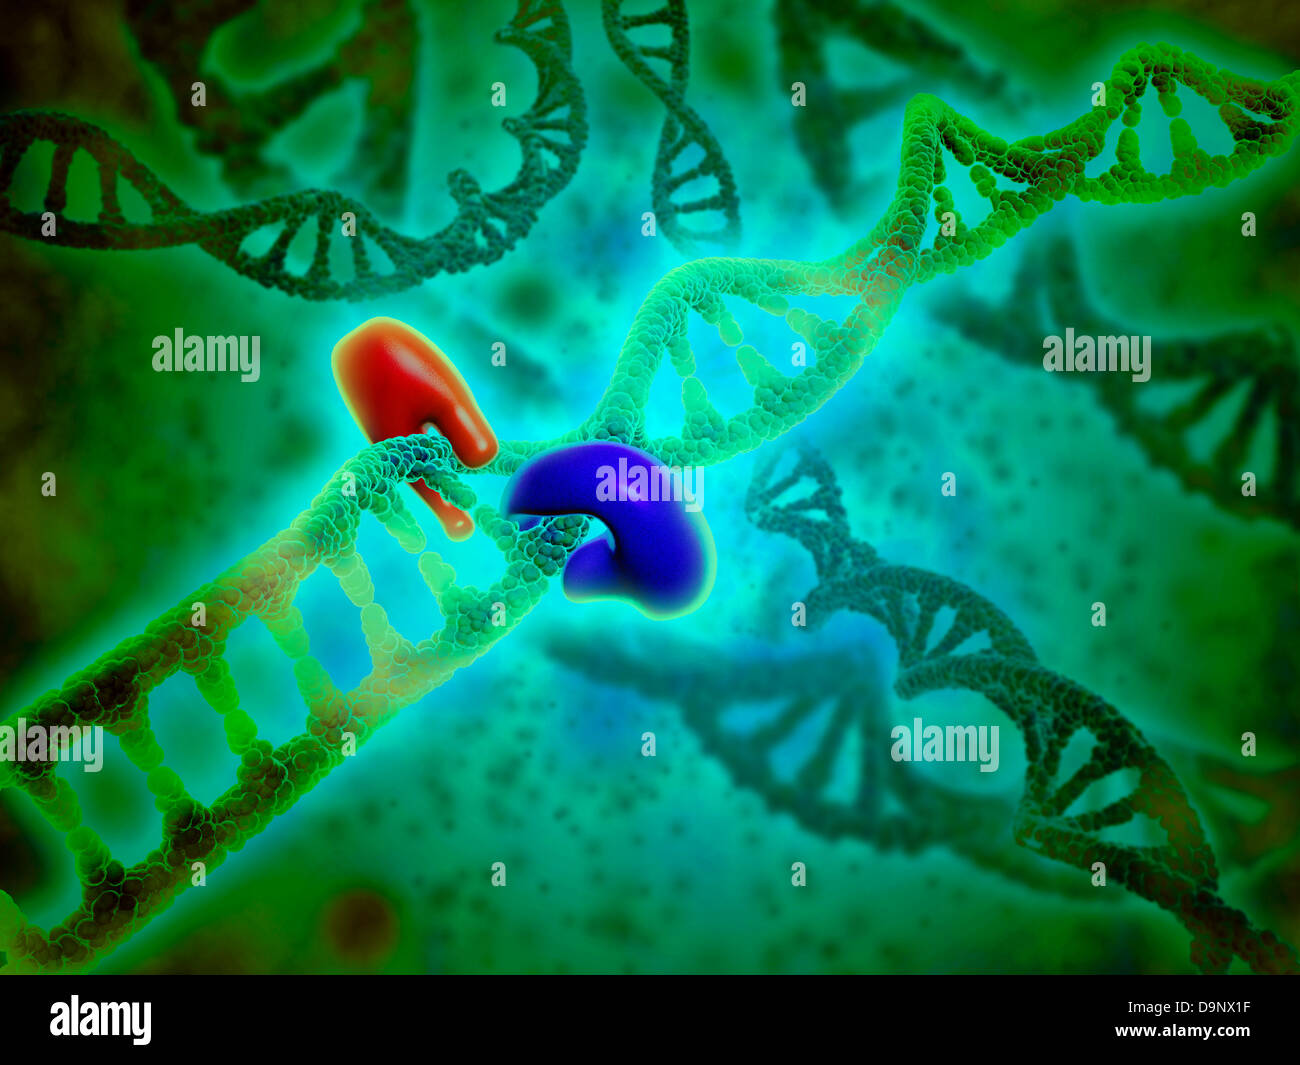 Microscopic view of DNA binding. Stock Photo